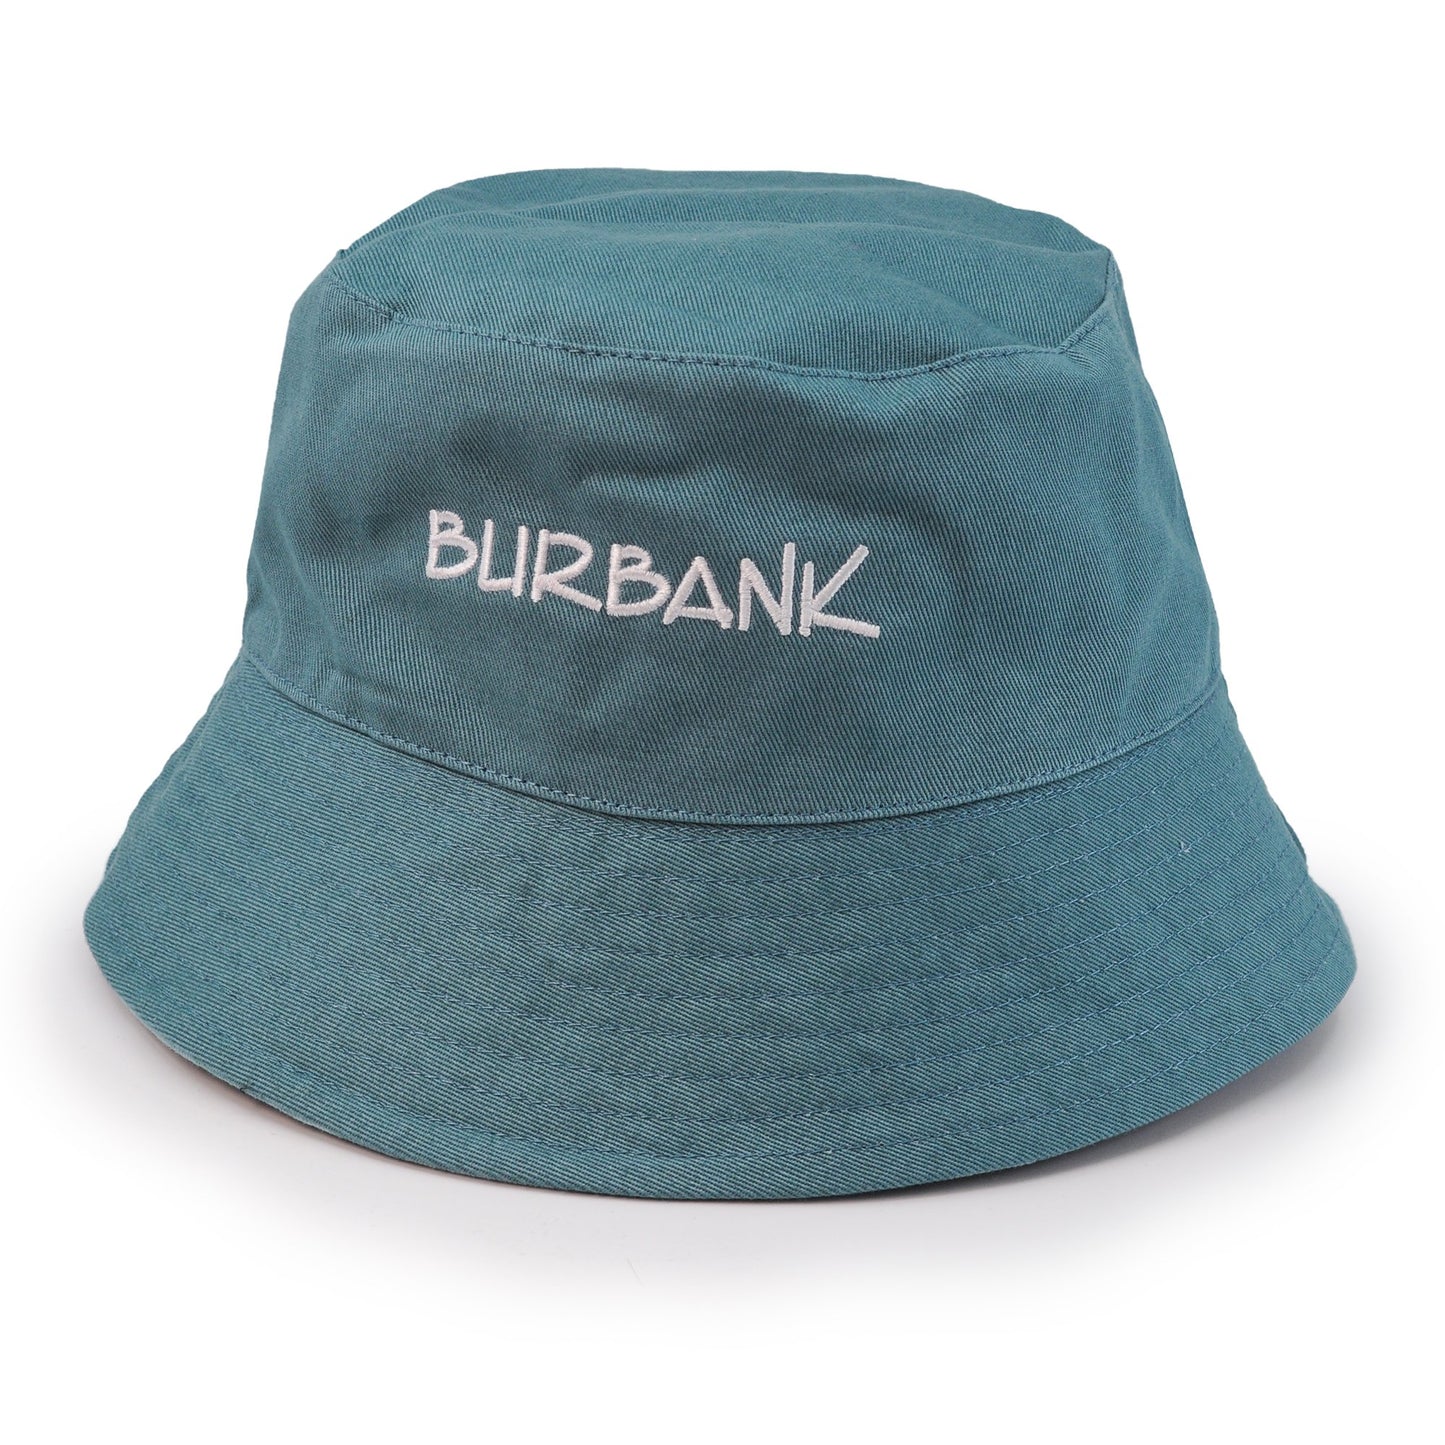 Reversible Your Beach City Unisex 100% Cotton Packable Summer Travel Bucket Beach Sun Hat Outdoor Cap. (Tie Dye Green/Green)